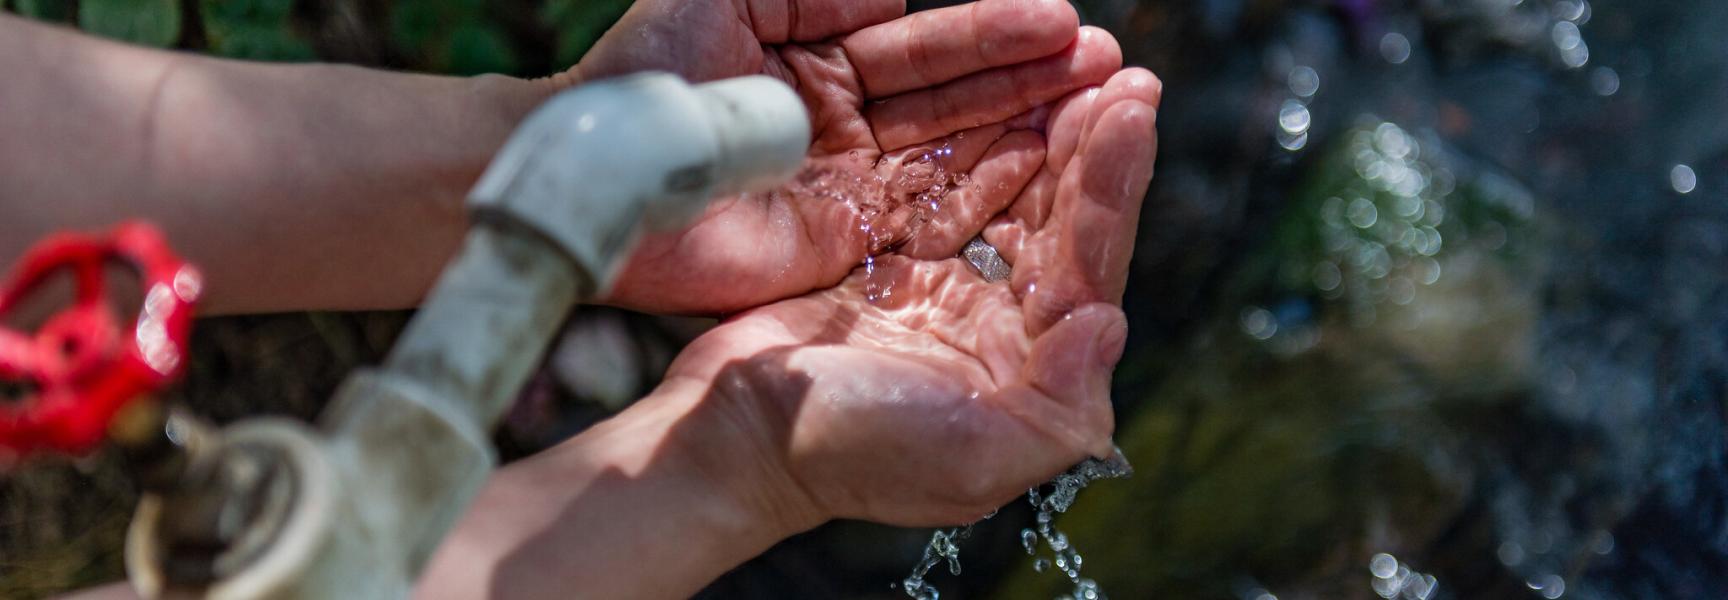 Hands holding water in Turkmenistan